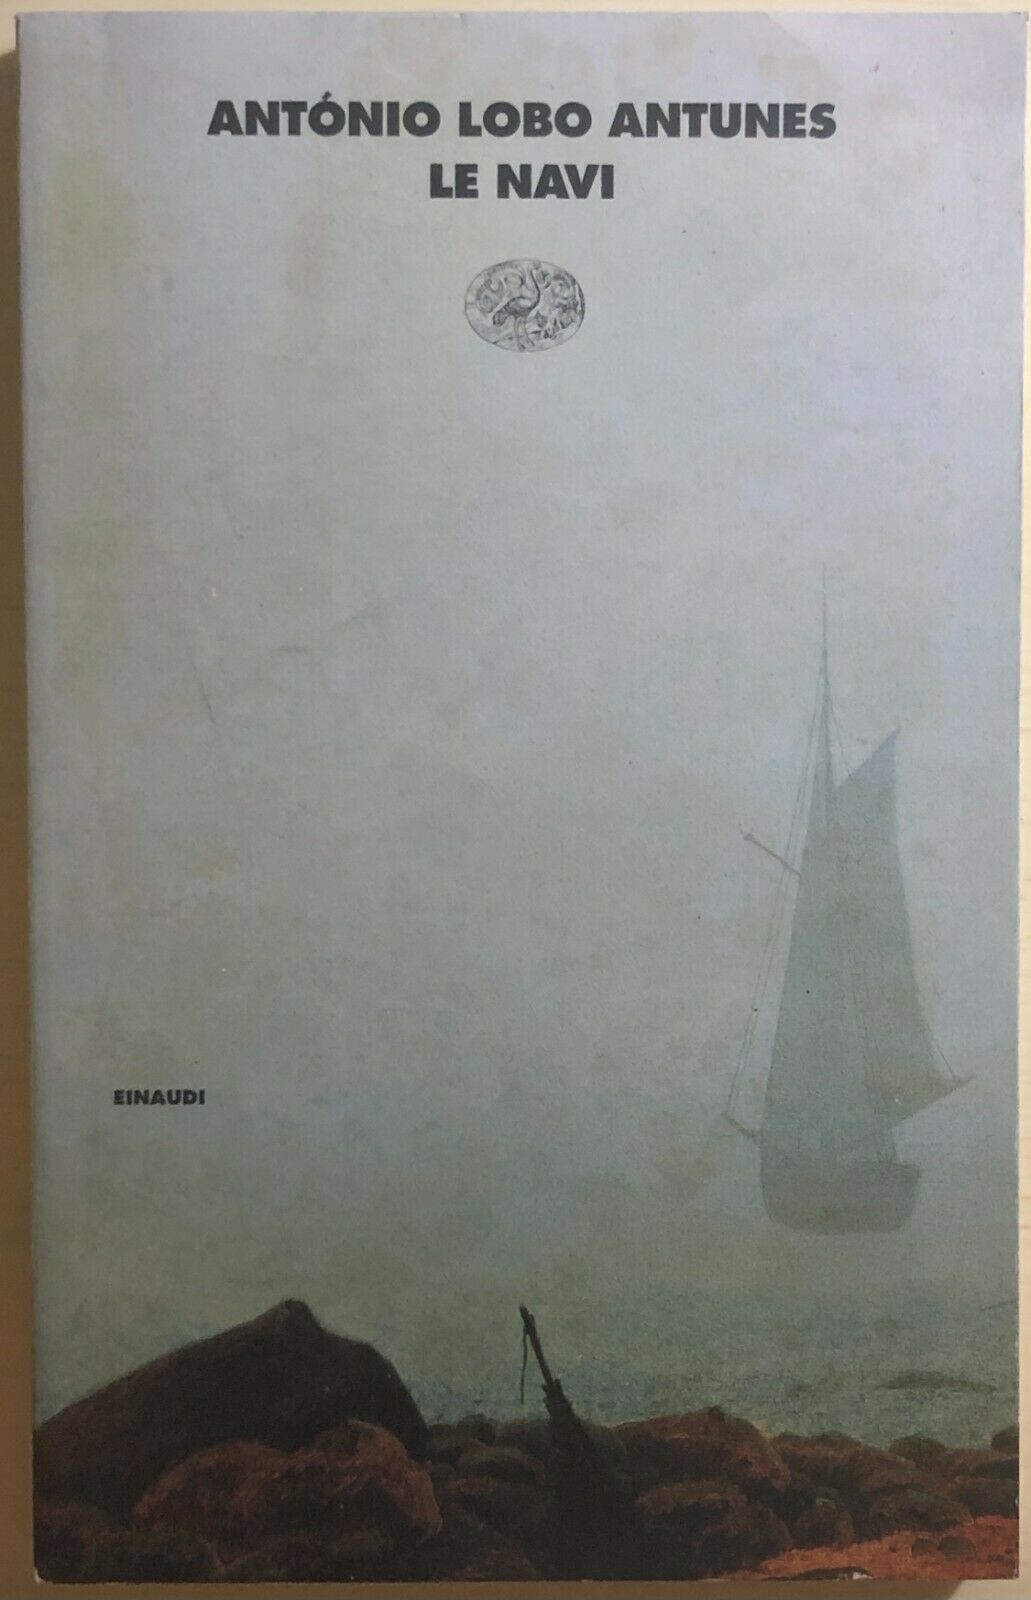 Le navi di Ant?nio Lobo Antunes, 1997, Einaudi